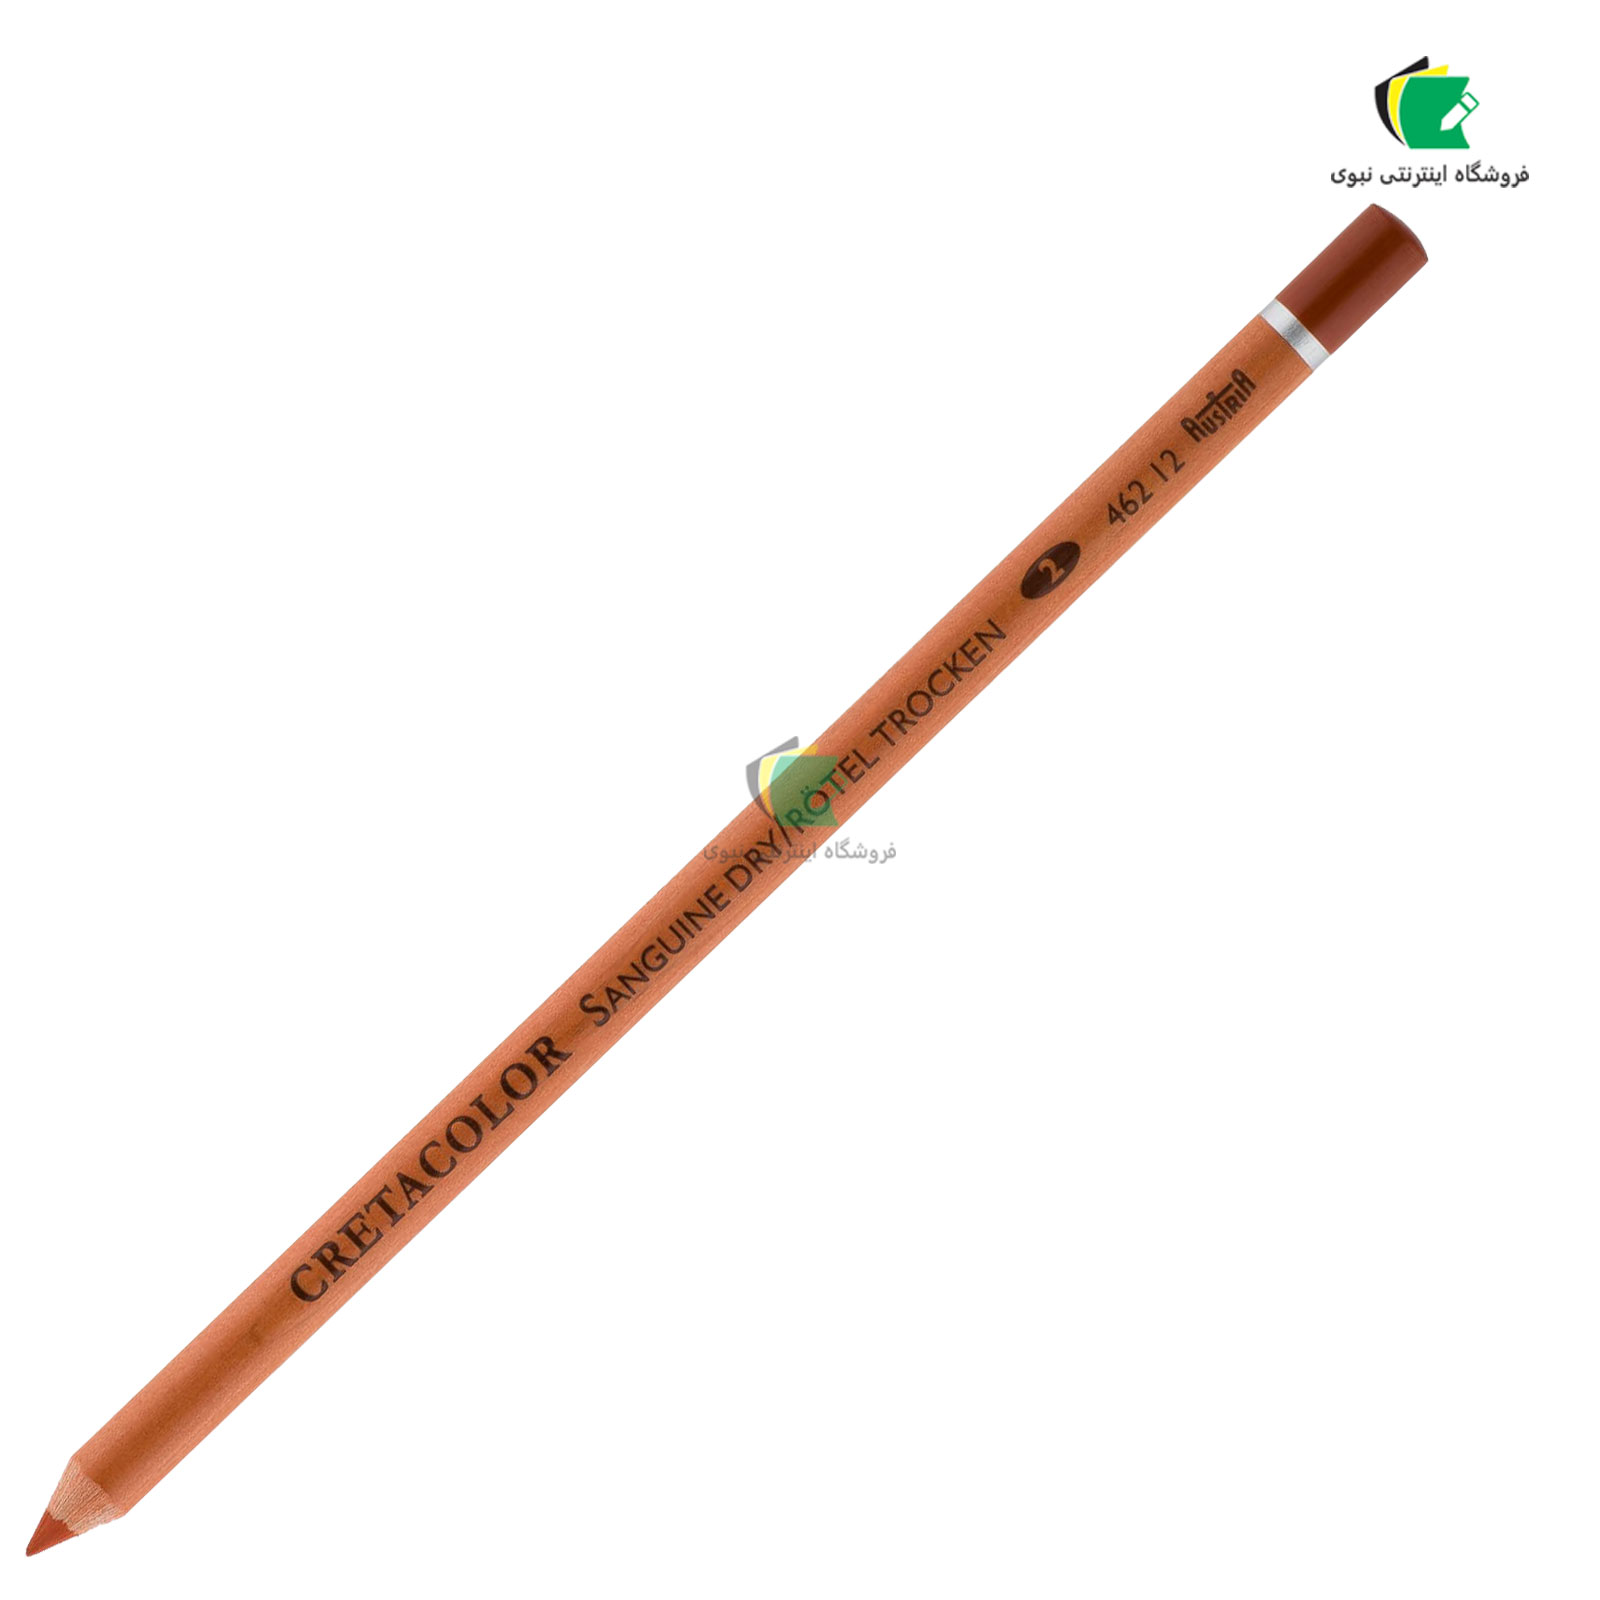 مداد کنته کرتاکالر مدل خشک آجری کد 46212